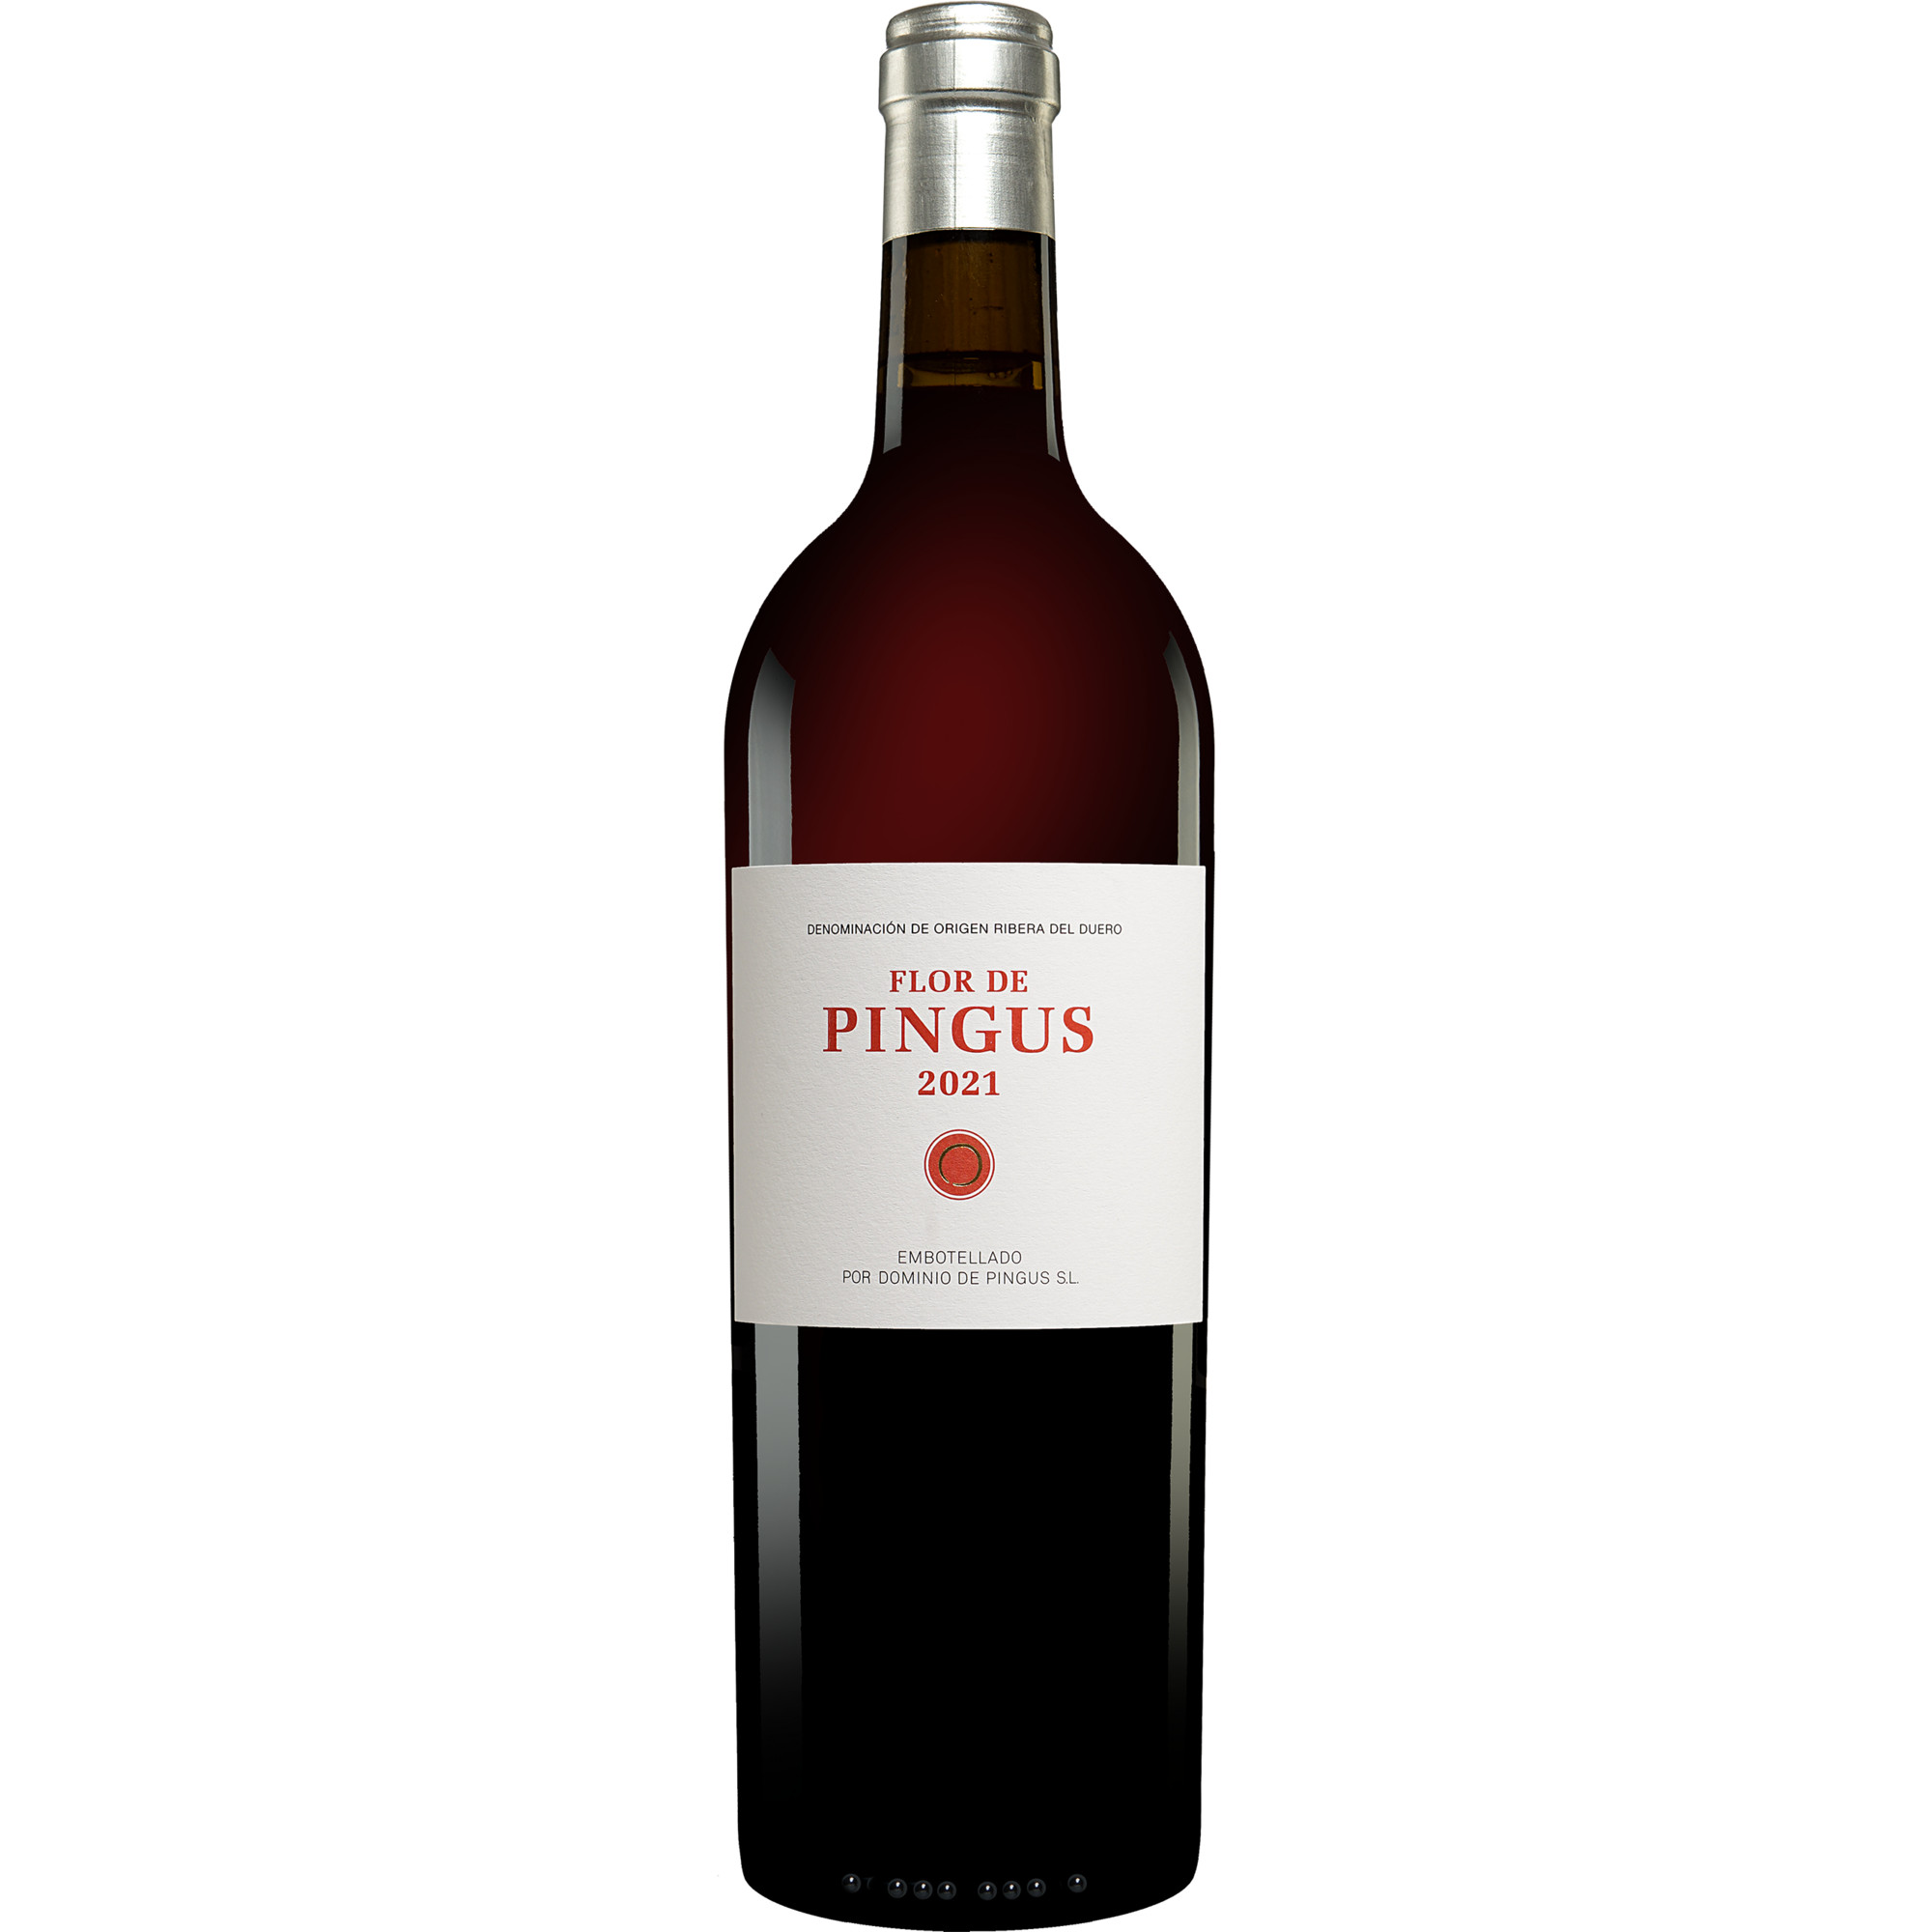 Pingus »Flor de Pingus« 2021  014.5% Vol. Rotwein Trocken aus Spanien